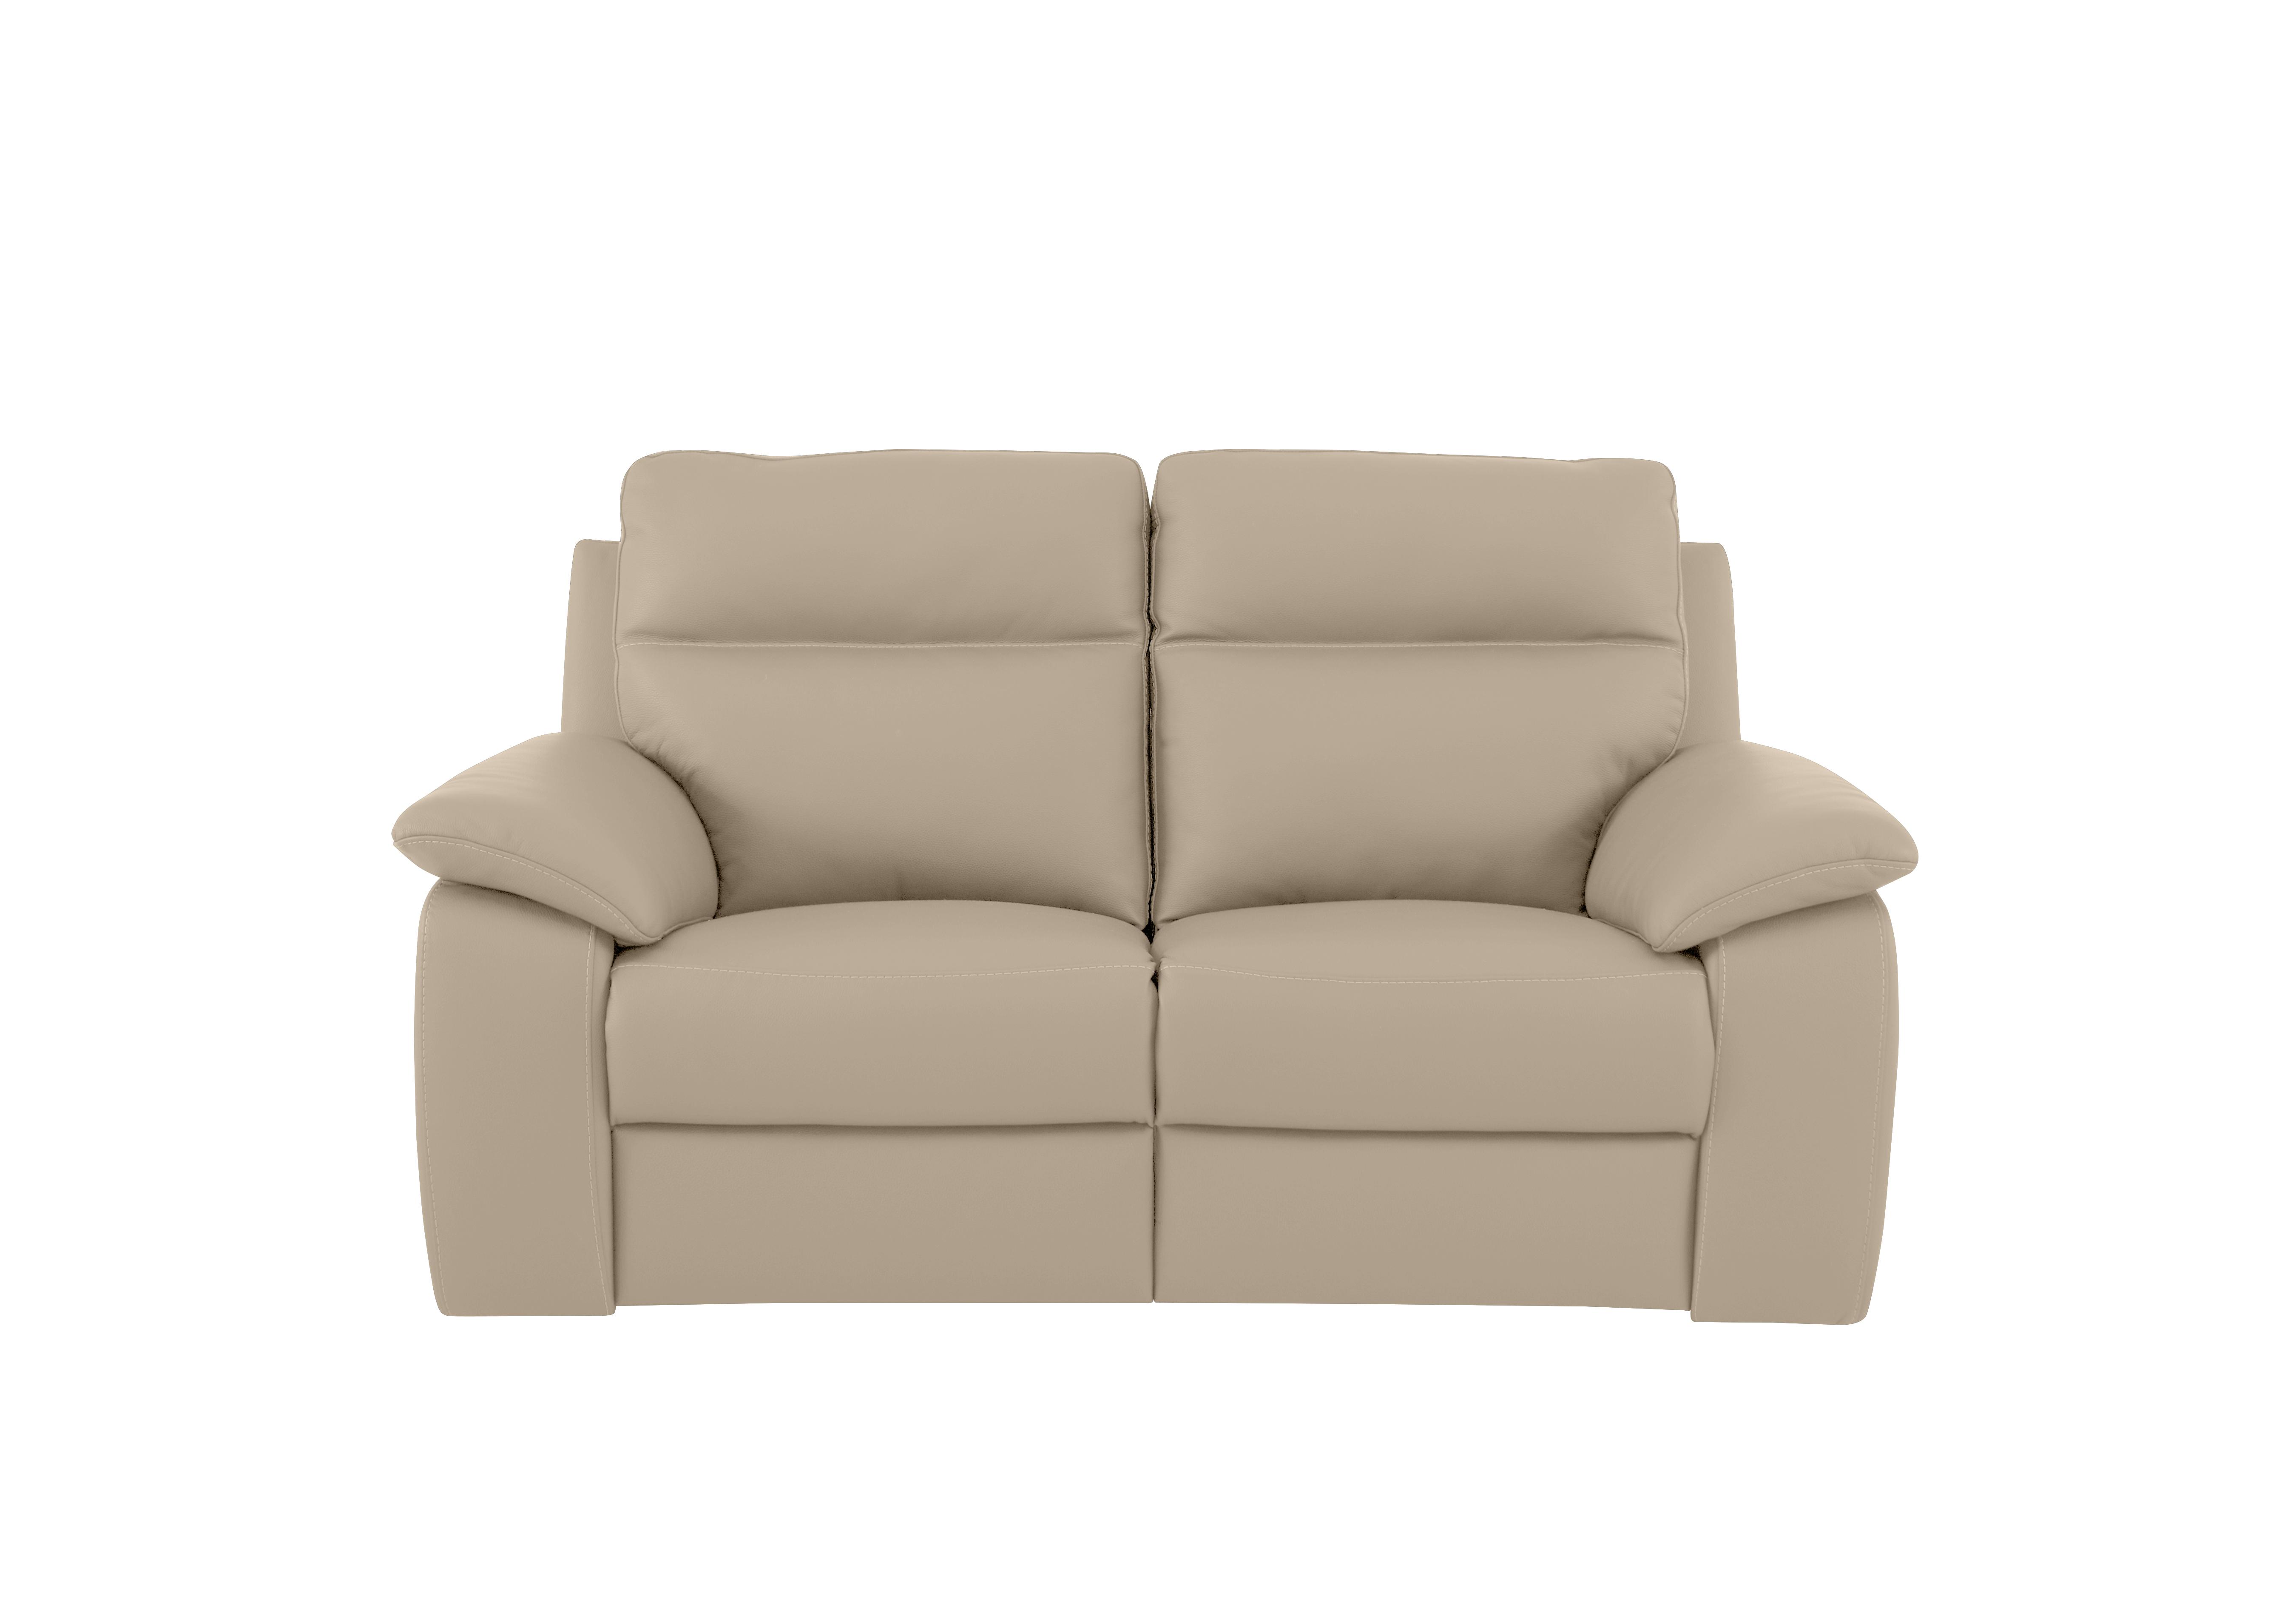 Pepino 2 Seater Leather Sofa in 352 Torello Fango on Furniture Village